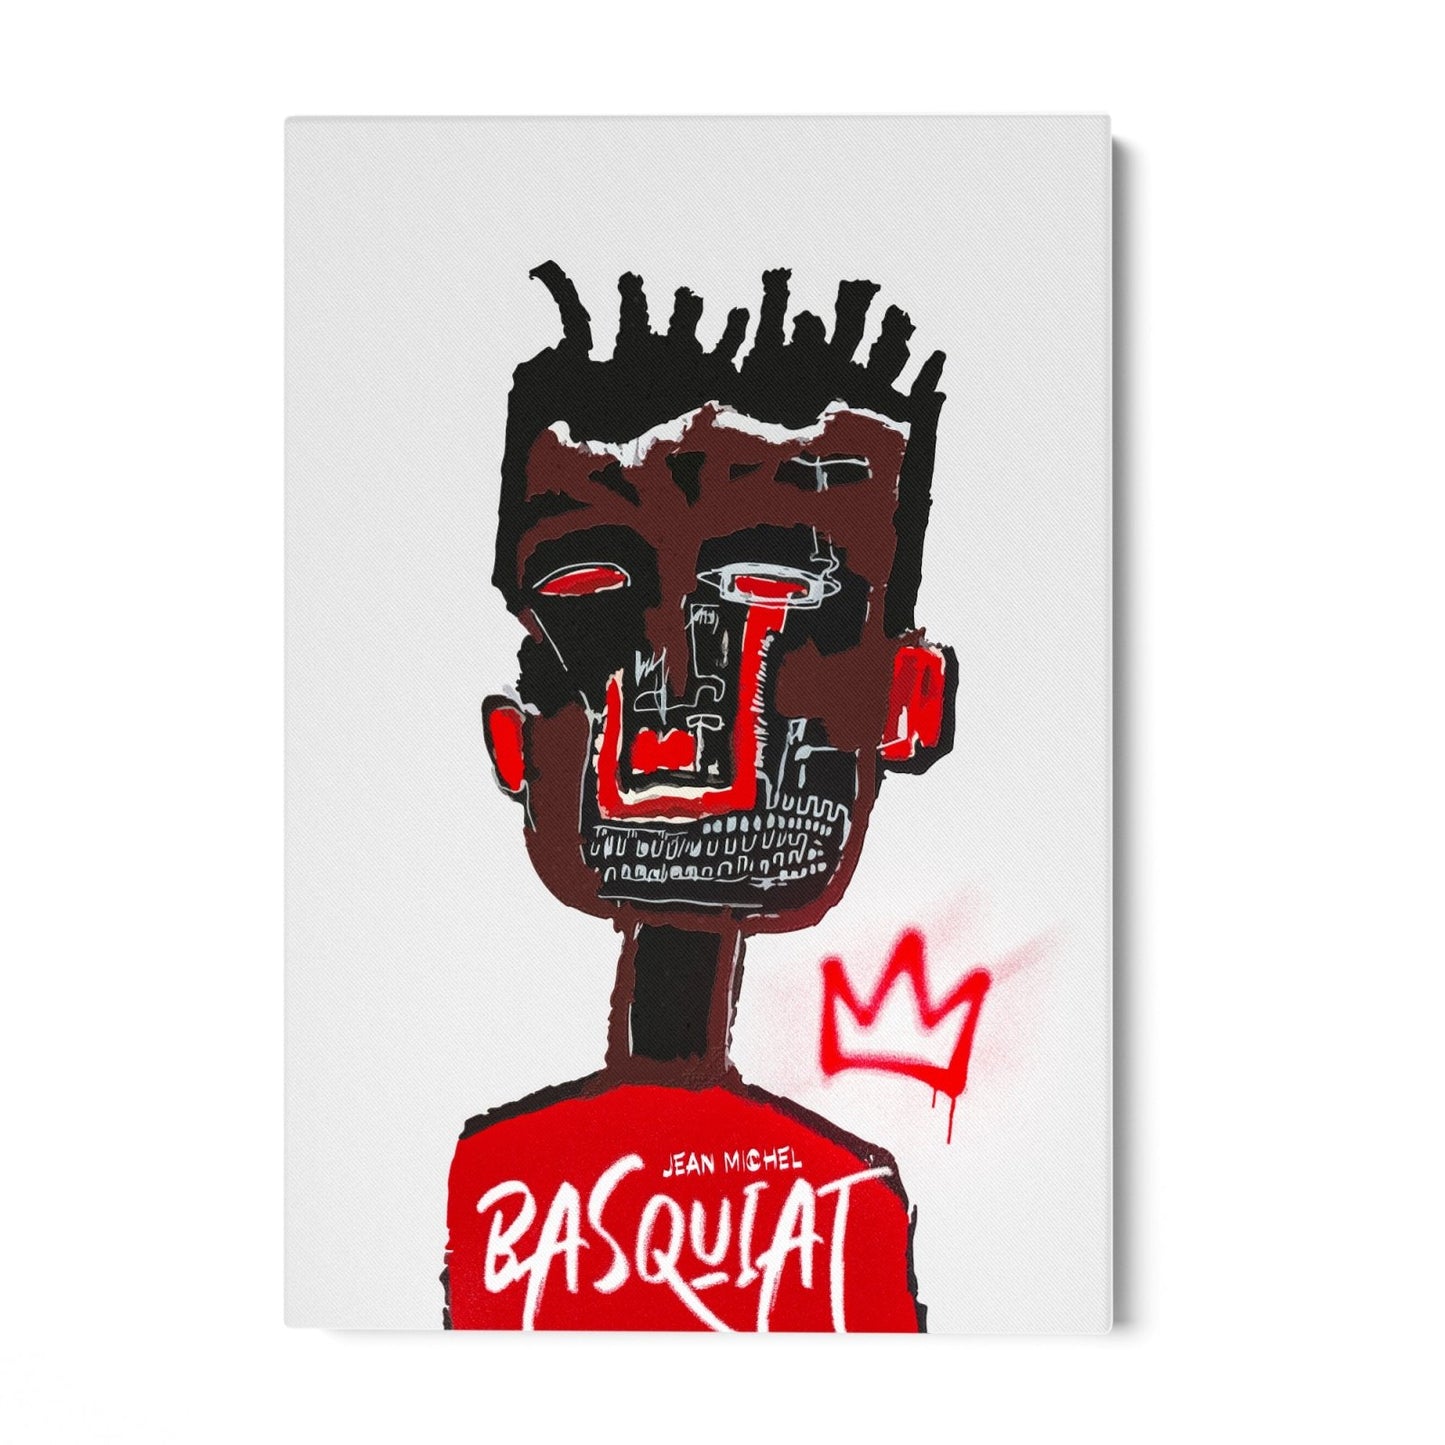 Croquis de Basquiat